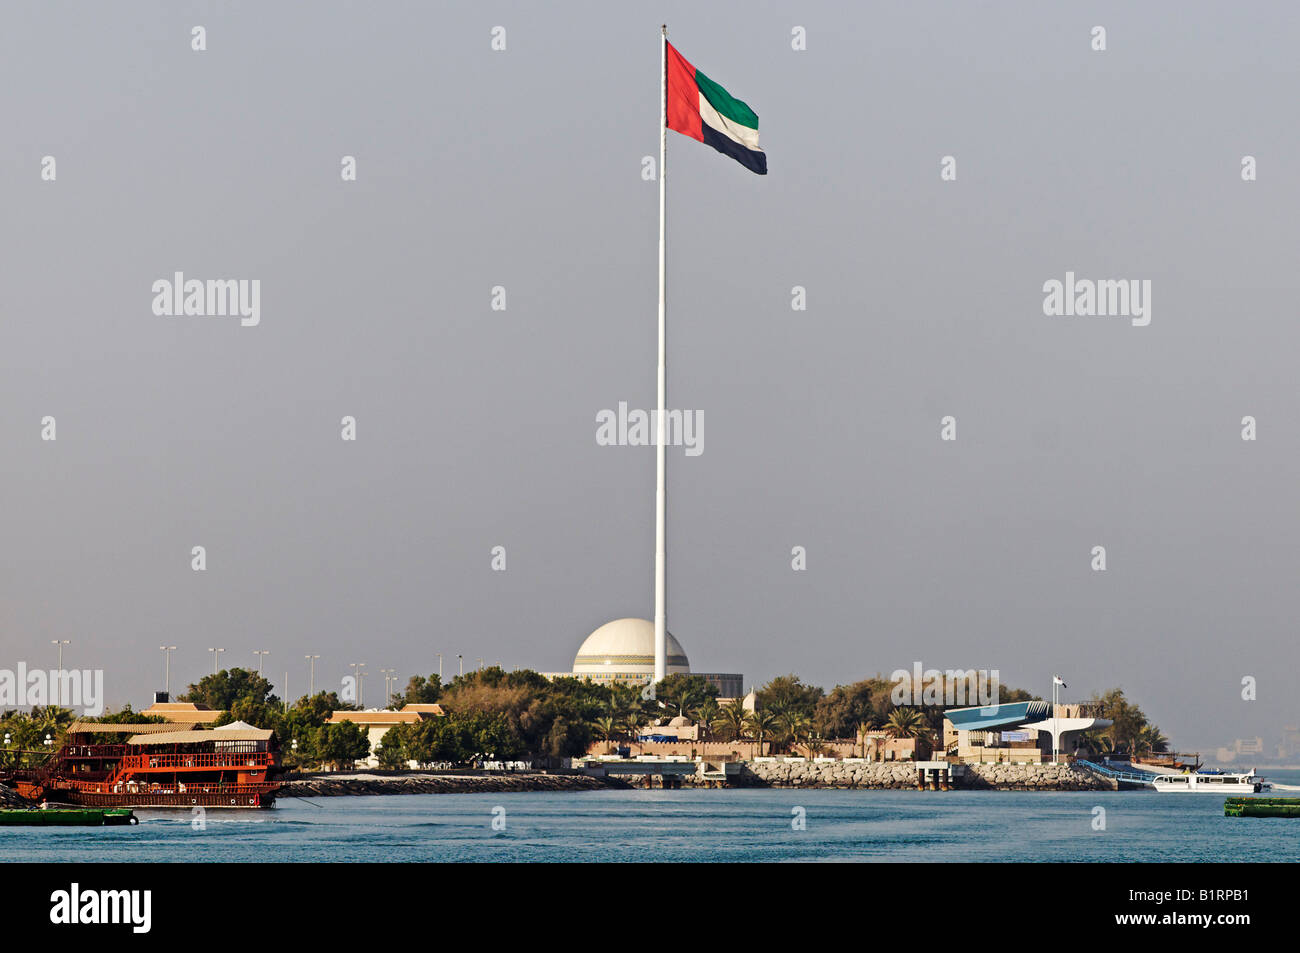 Highest flagpole in the world with the flag of the United Arab Emirates, Breakwater, Abu Dhabi City, Emirat Abu Dhabi, United A Stock Photo